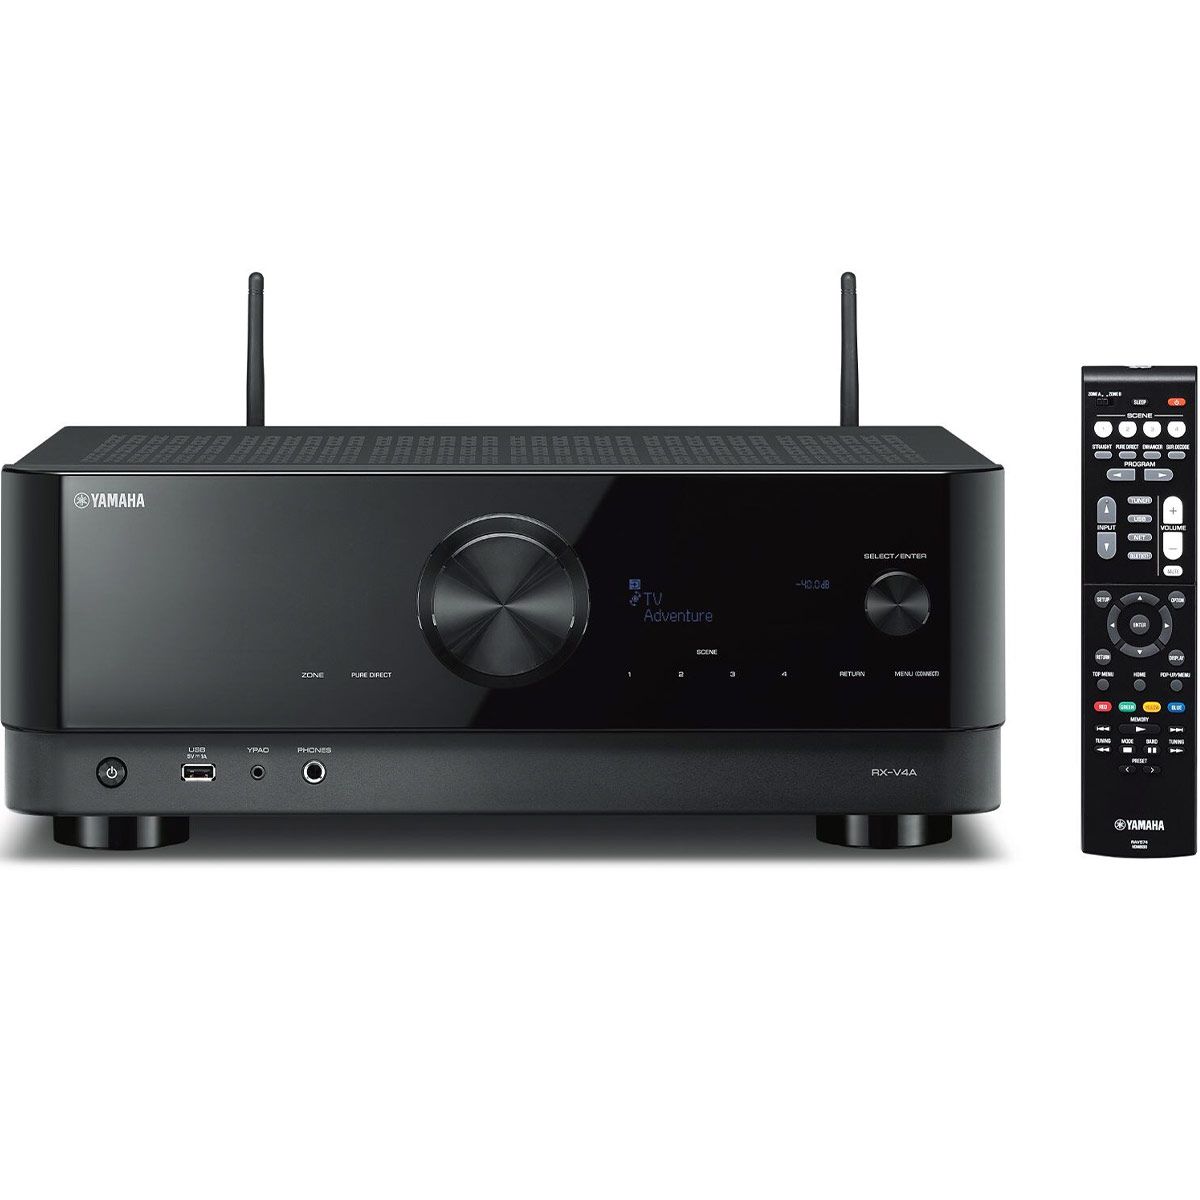 Yamaha RX-V4A 5.2-Channel AV Receiver | Audio Advice